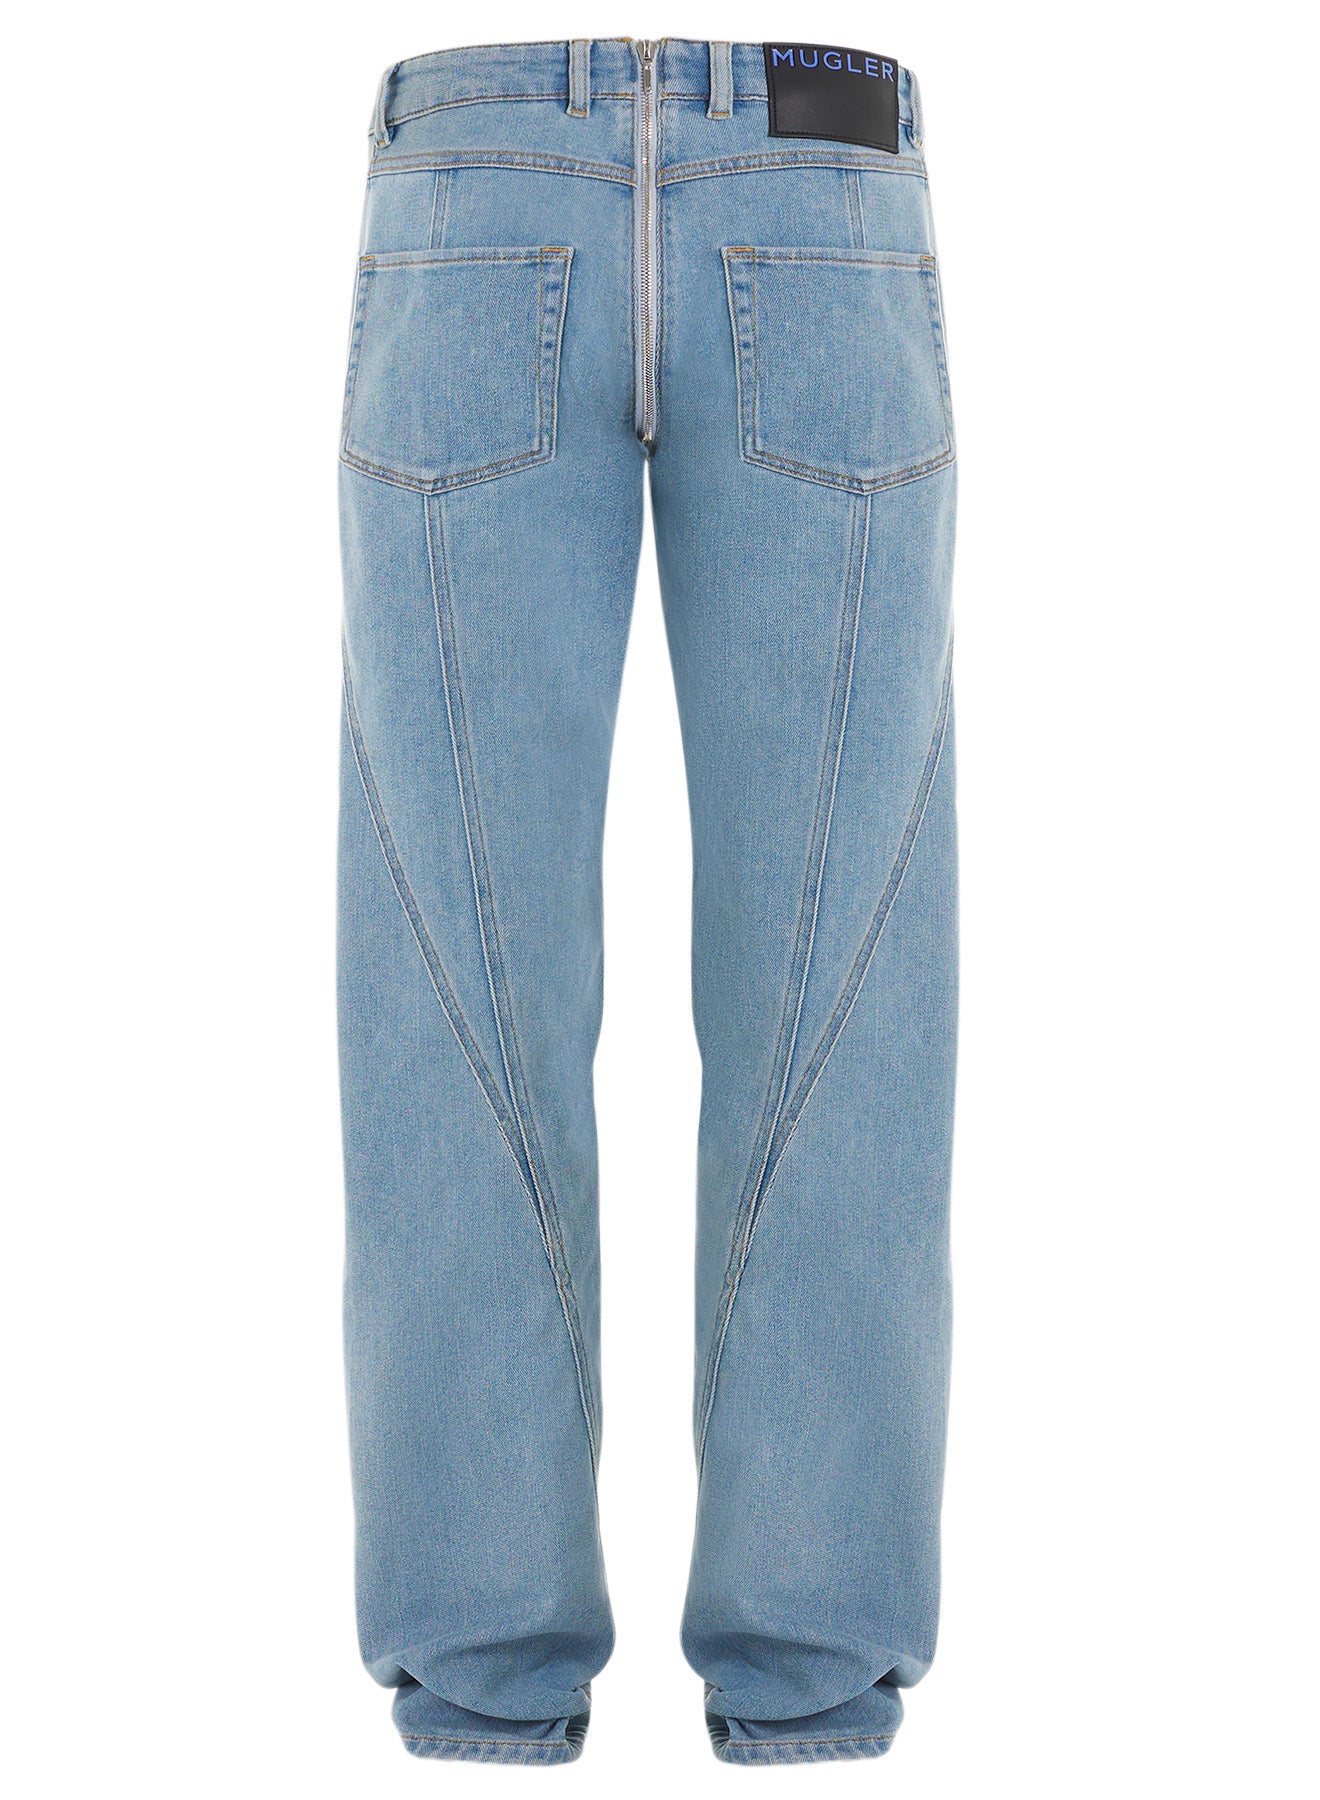 blue zipped jeans